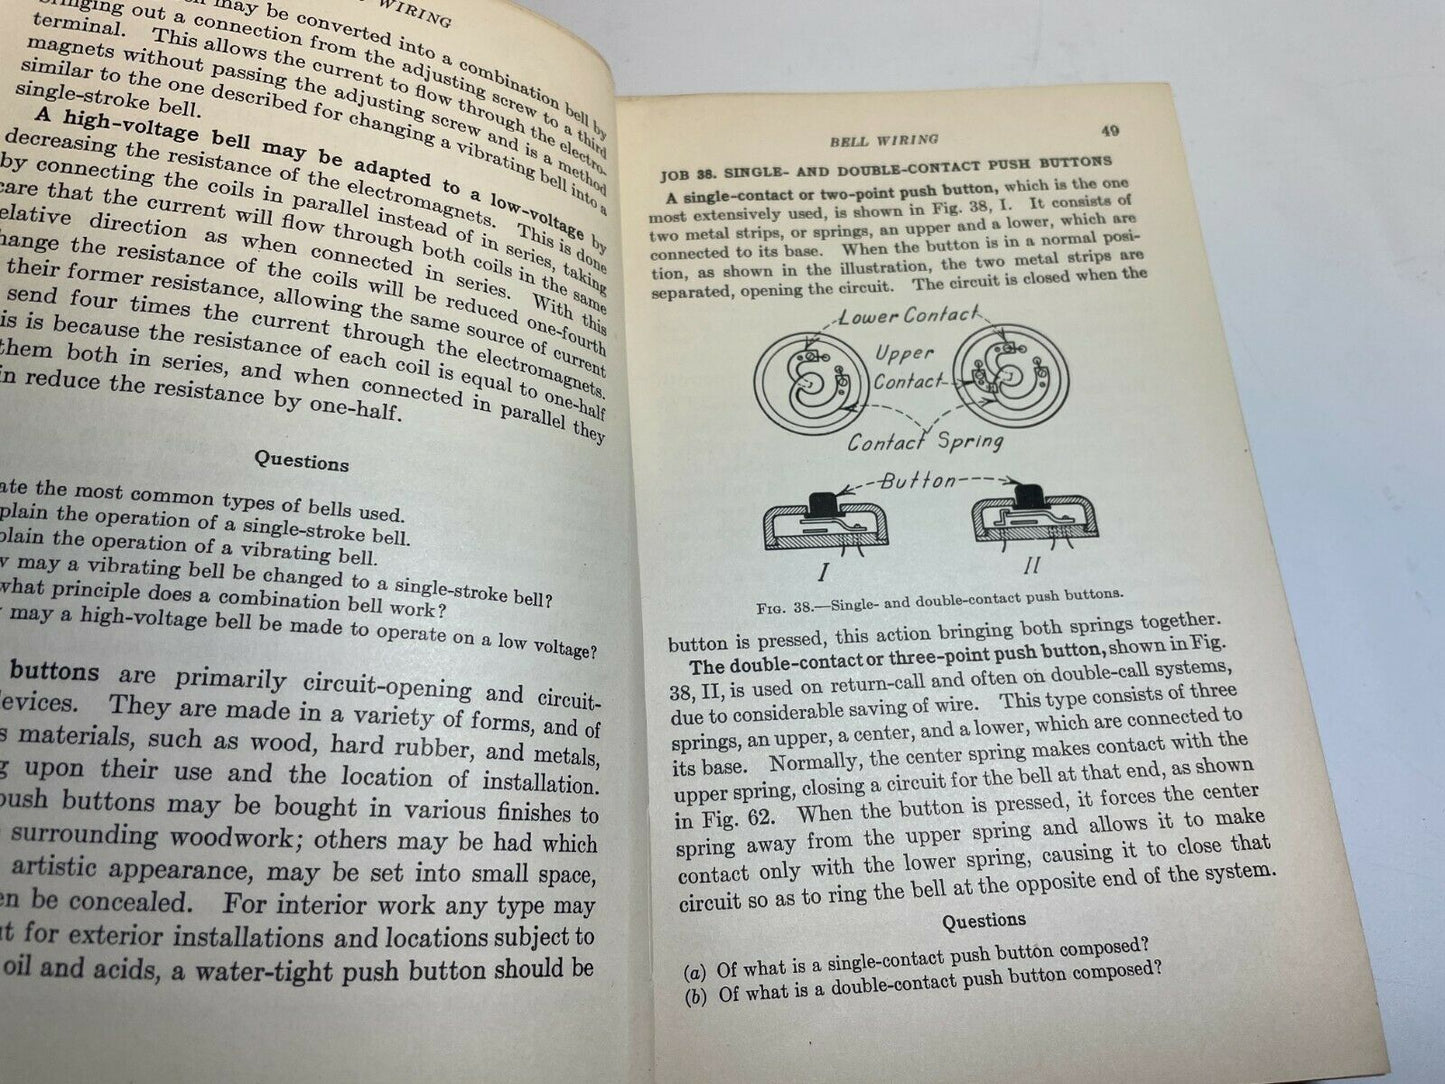 Electric Wiring, Albert Schuhler, 1930, 2nd ed, 2nd impression HC ex libris (B3)